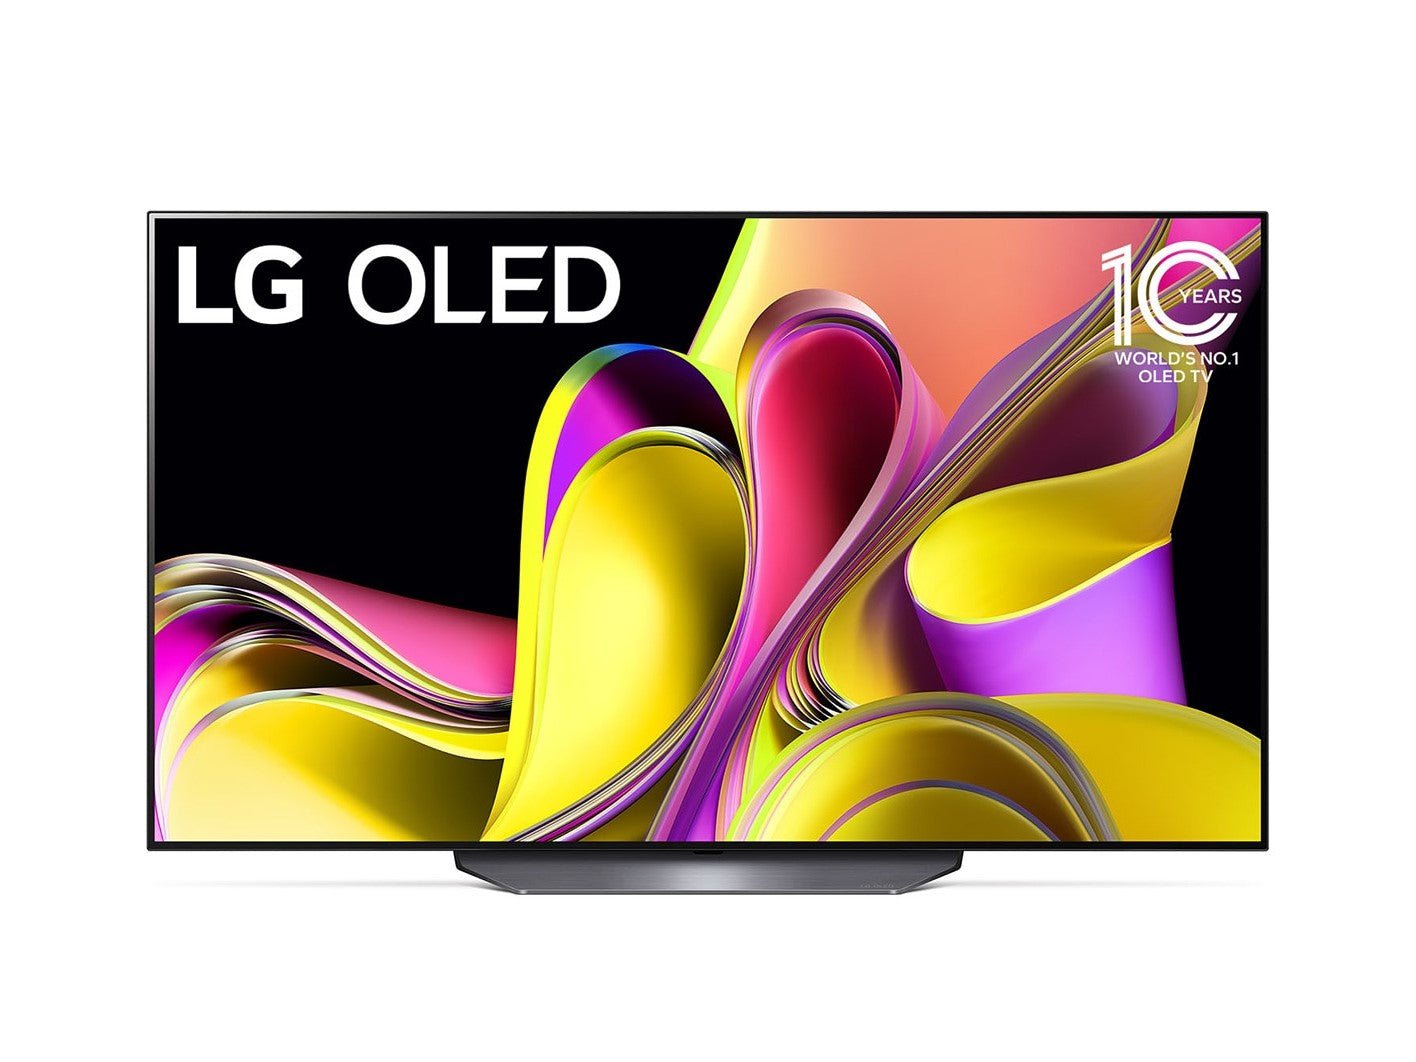 LG 樂金 B3 4K OLED 智能電視 - Fever Electrics 電器熱網購平台